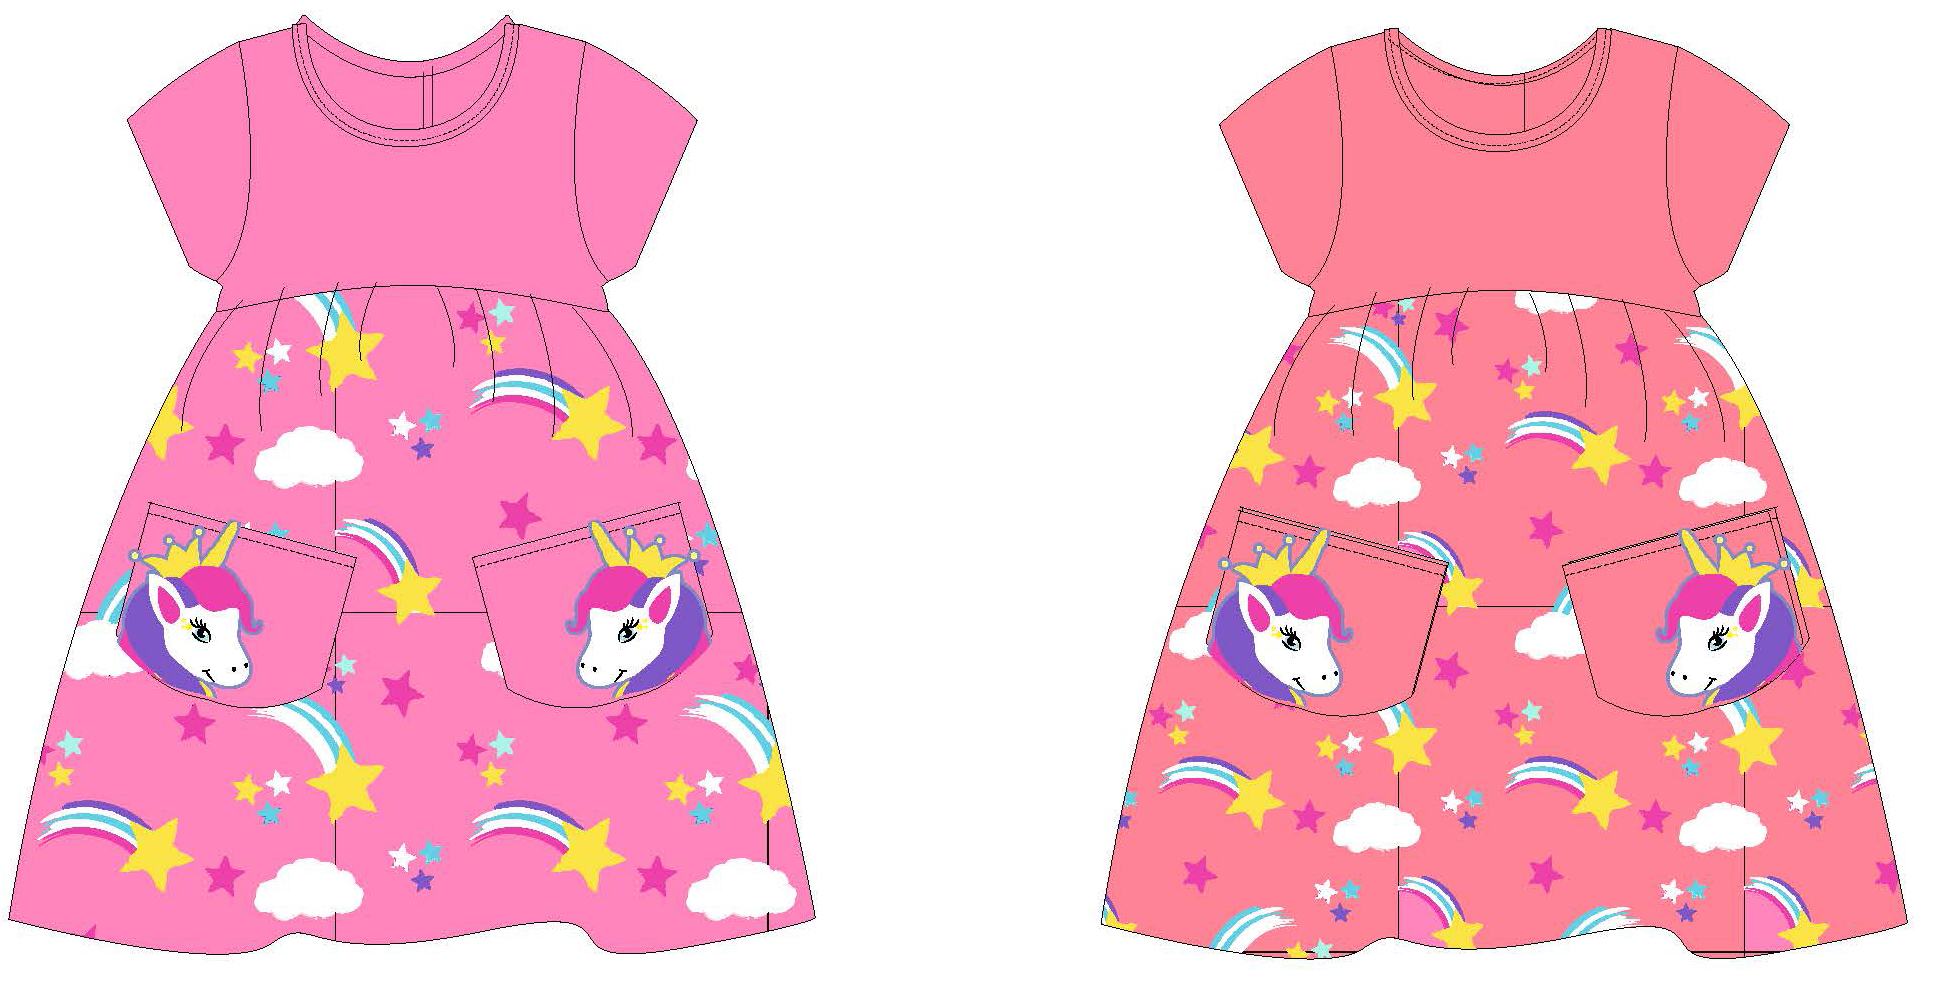 Baby Girl's Short-Sleeved Knit DRESS w/ Cargo Pockets  - Unicorn & Rainbow Star Print - Size 12M-24M